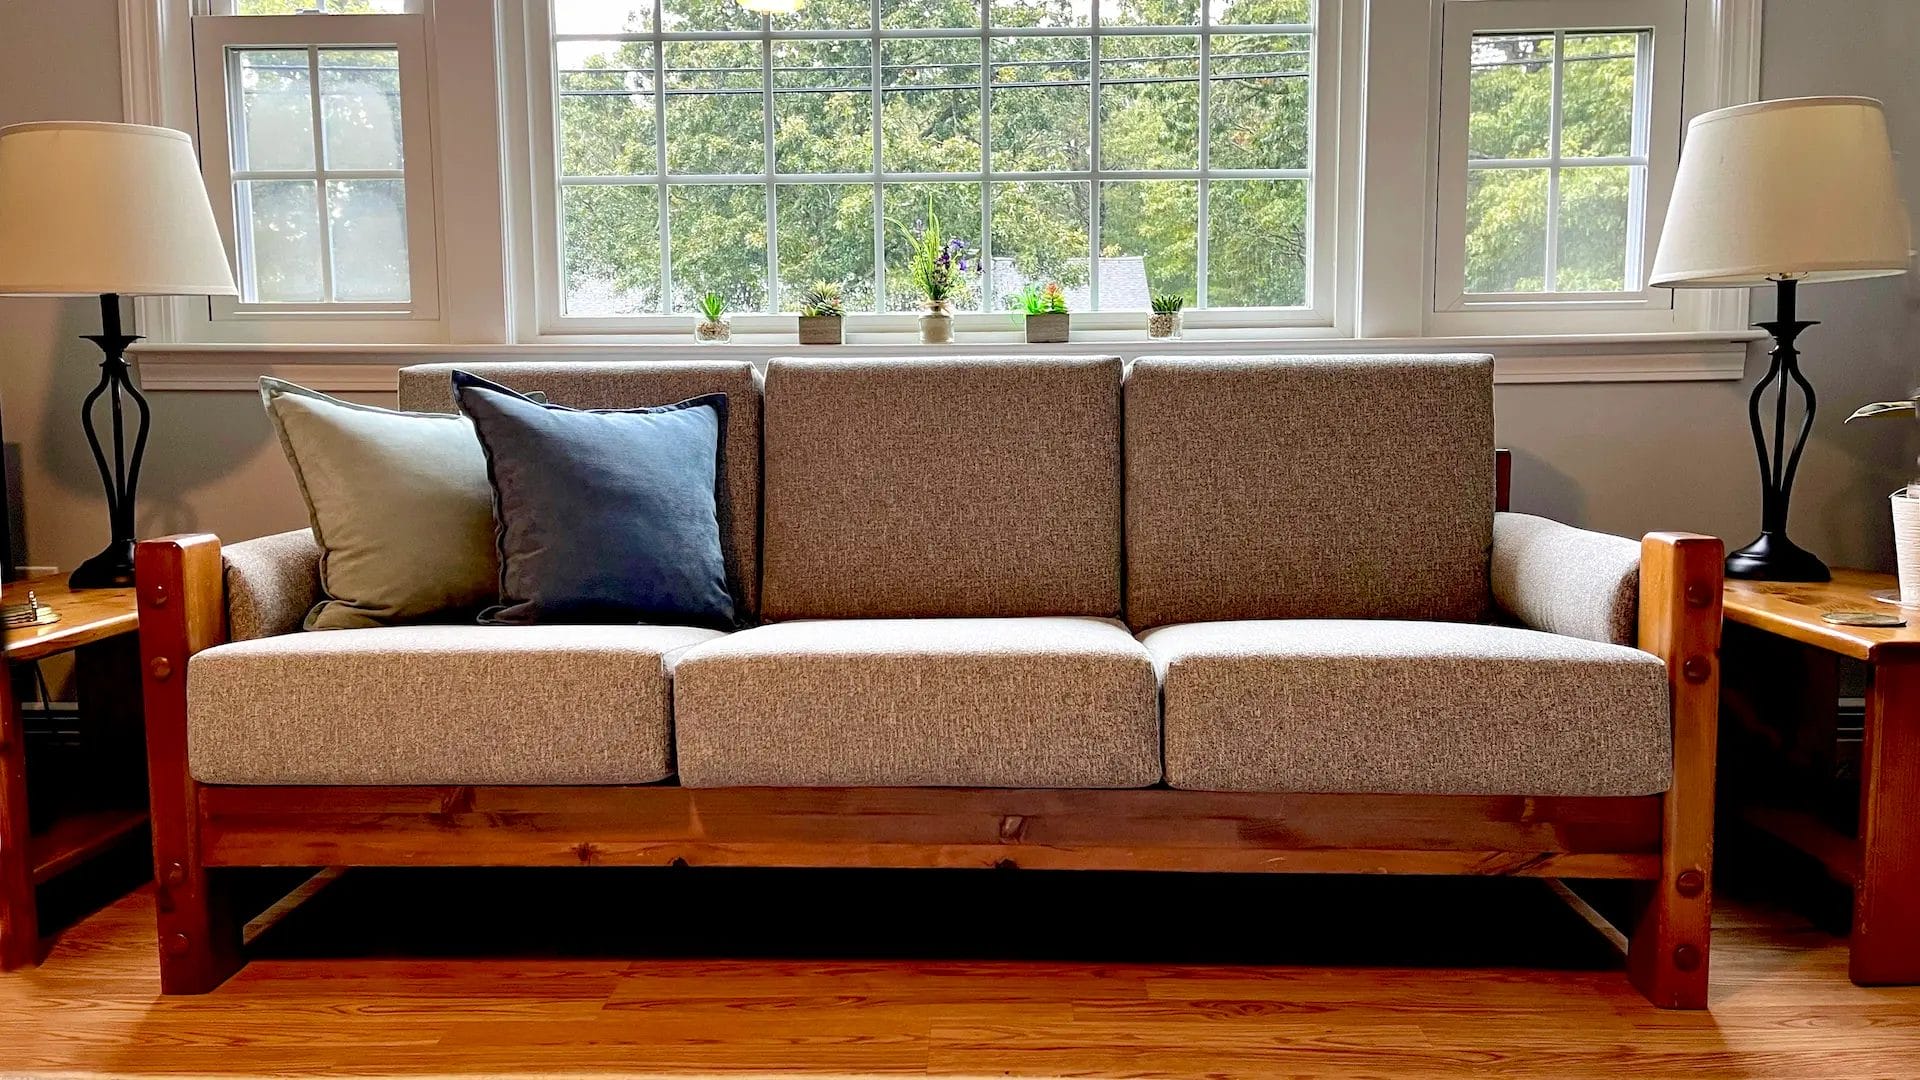 High Density Upholstery Foam ( Cushion Sofa chair couch